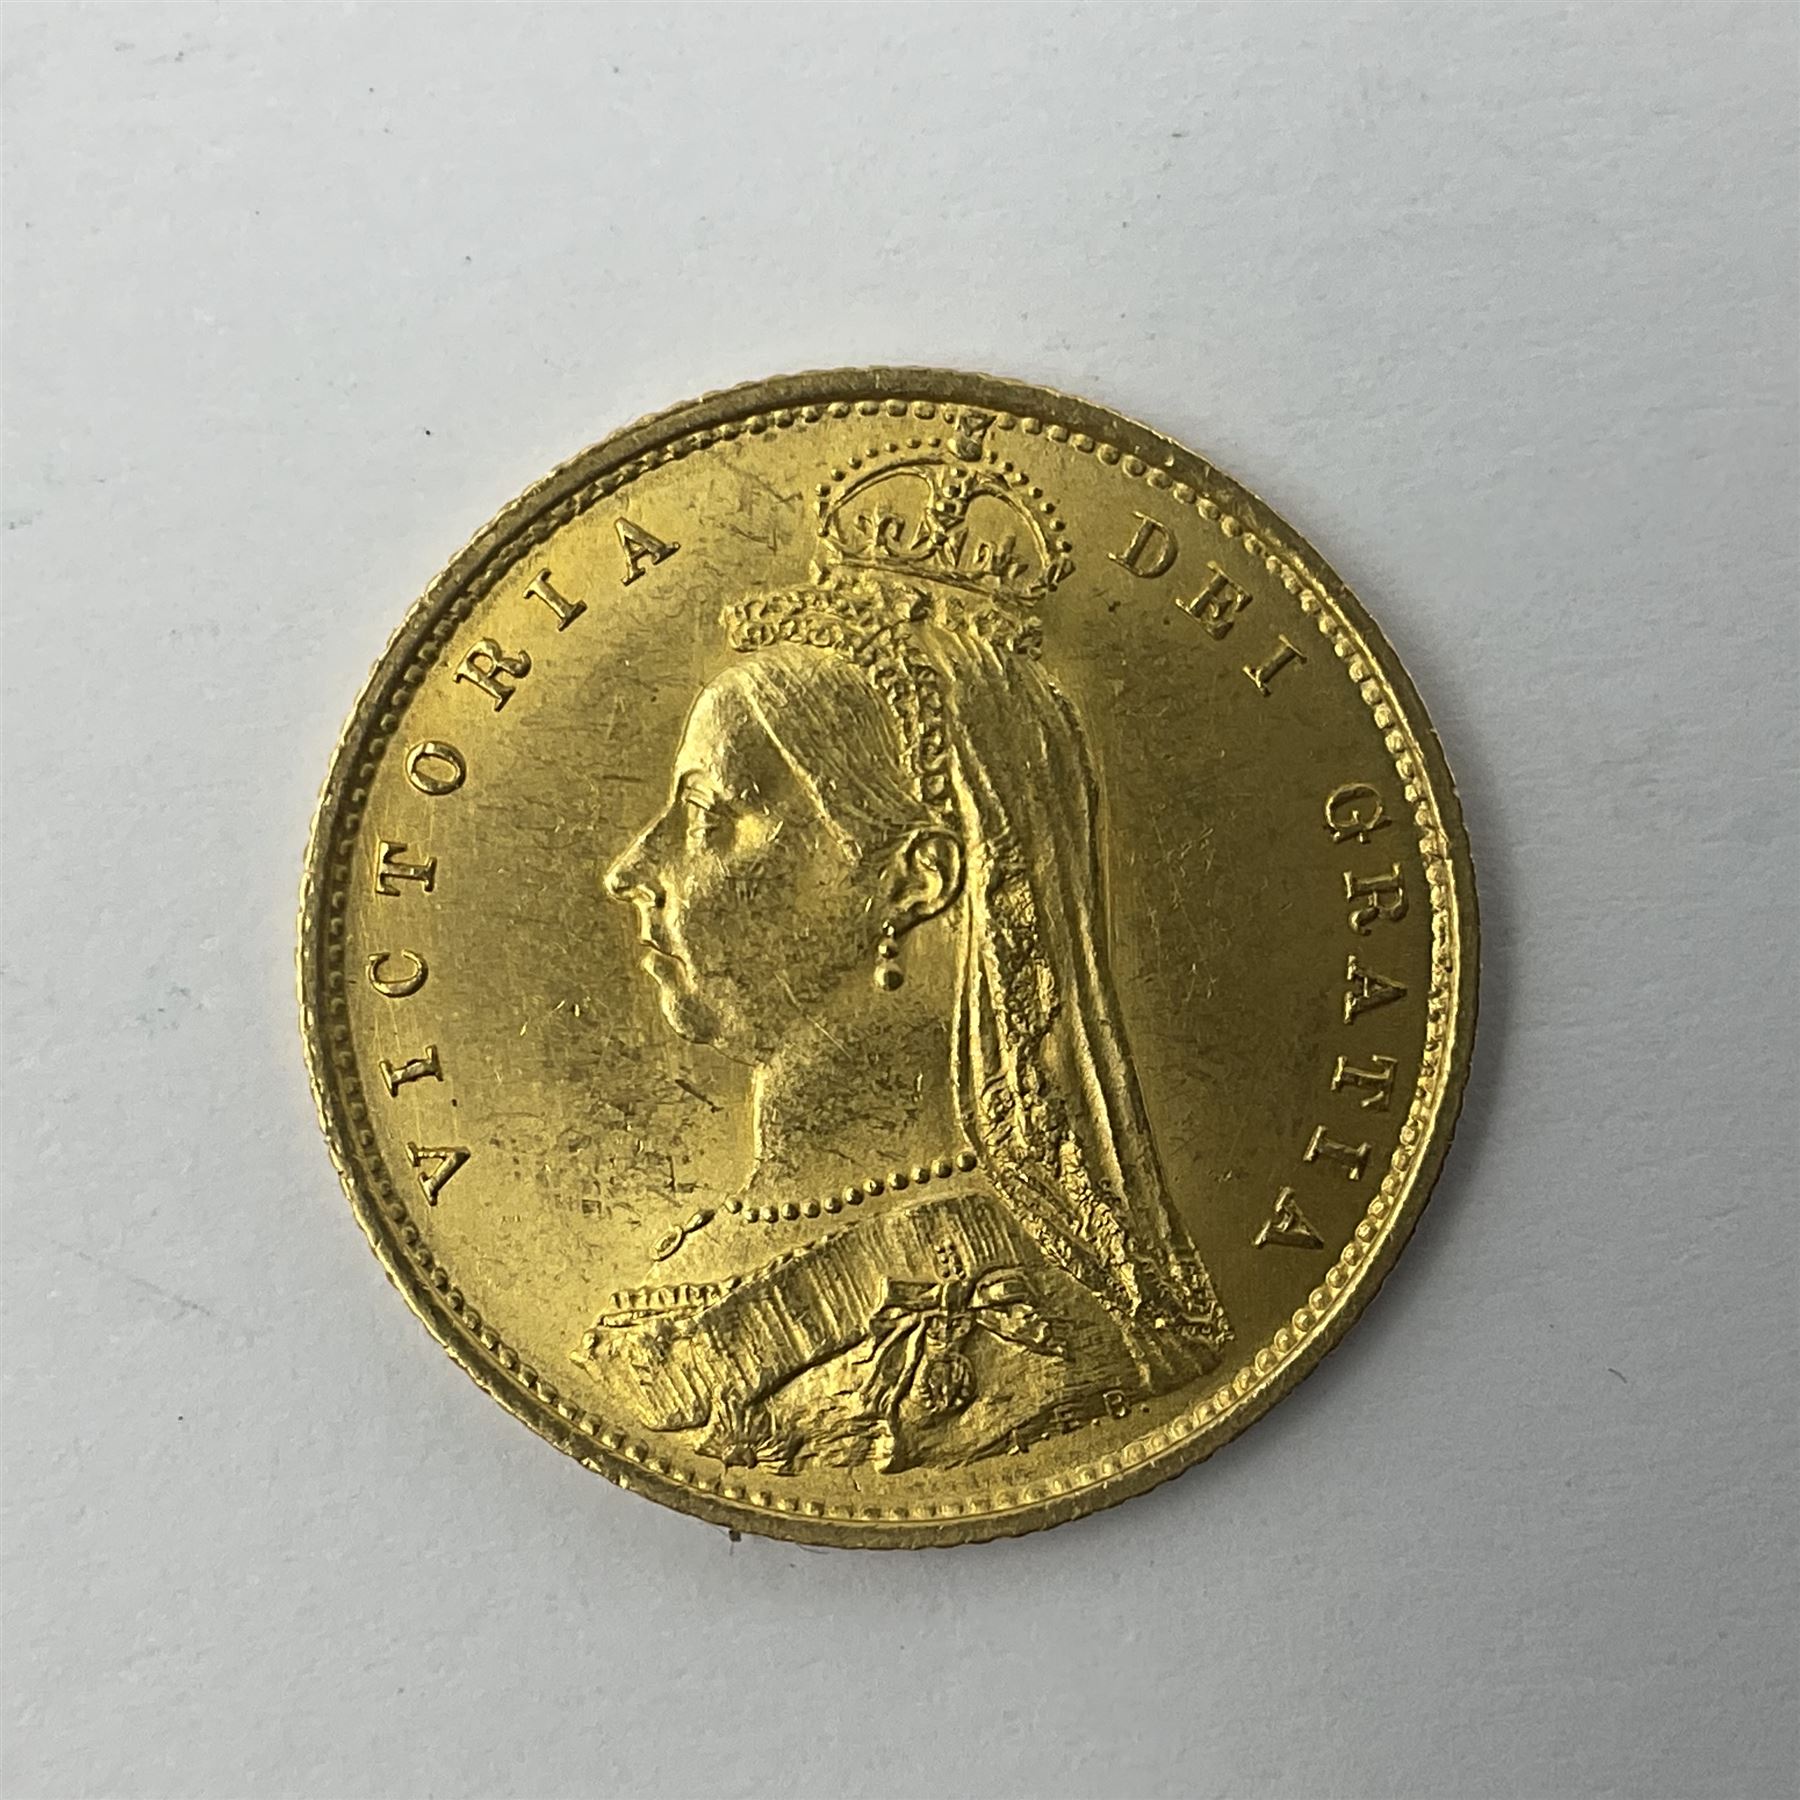 Queen Victoria 1887 gold half sovereign coin - Image 2 of 3